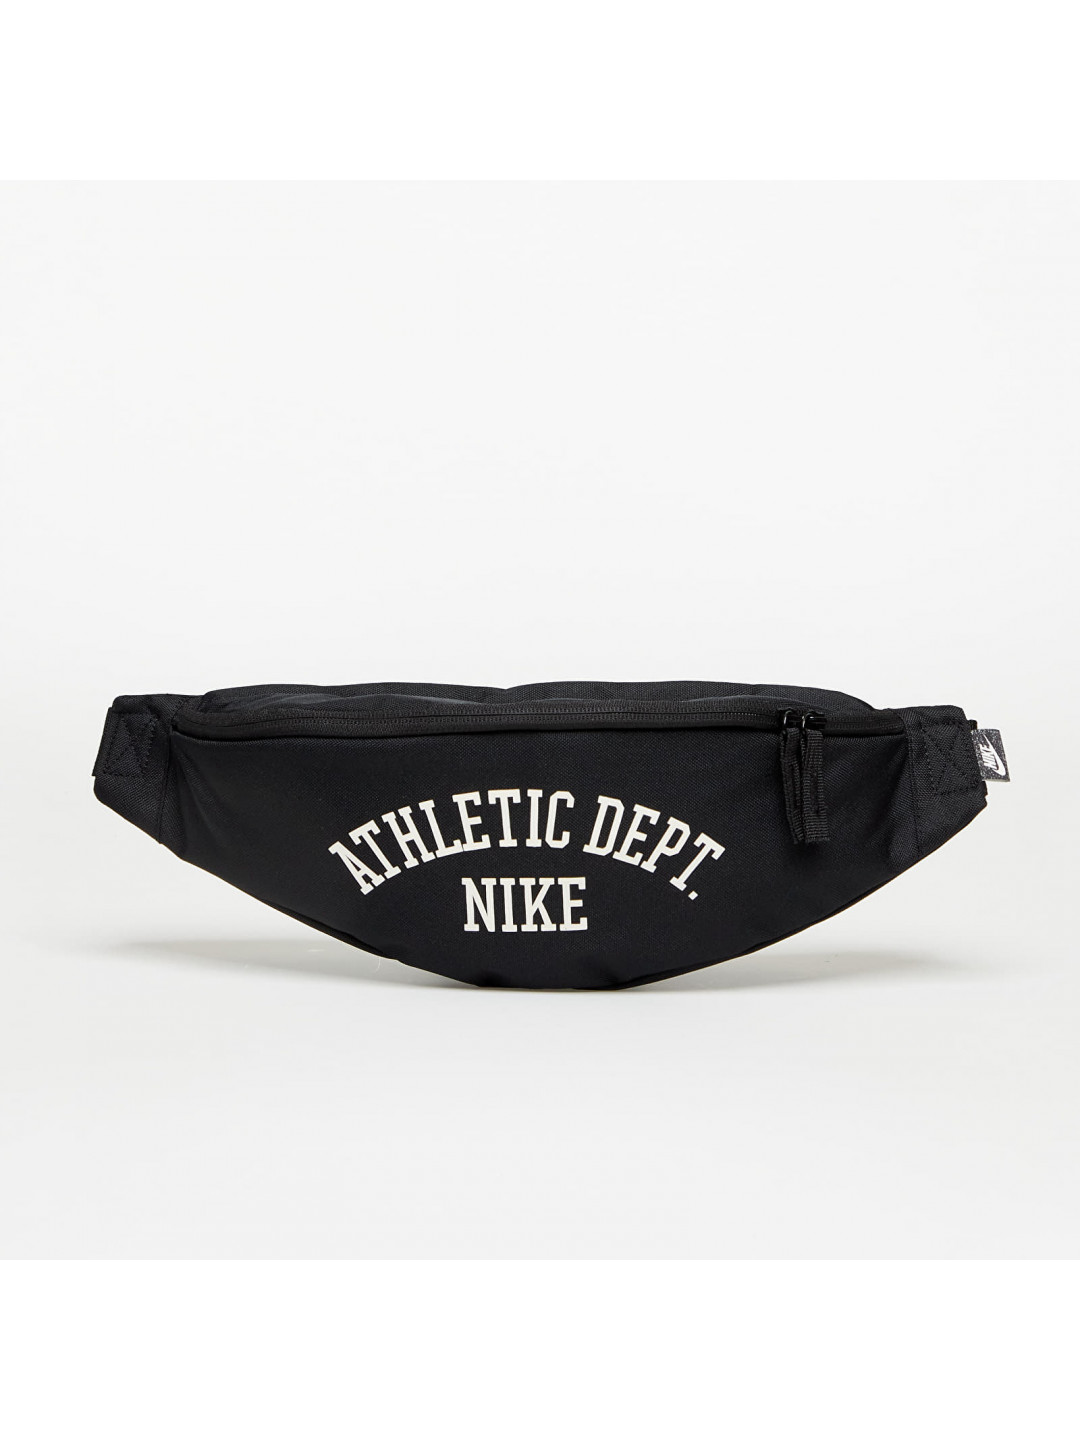 Nike Sportswear Heritage Waist Bag Black Black Sail